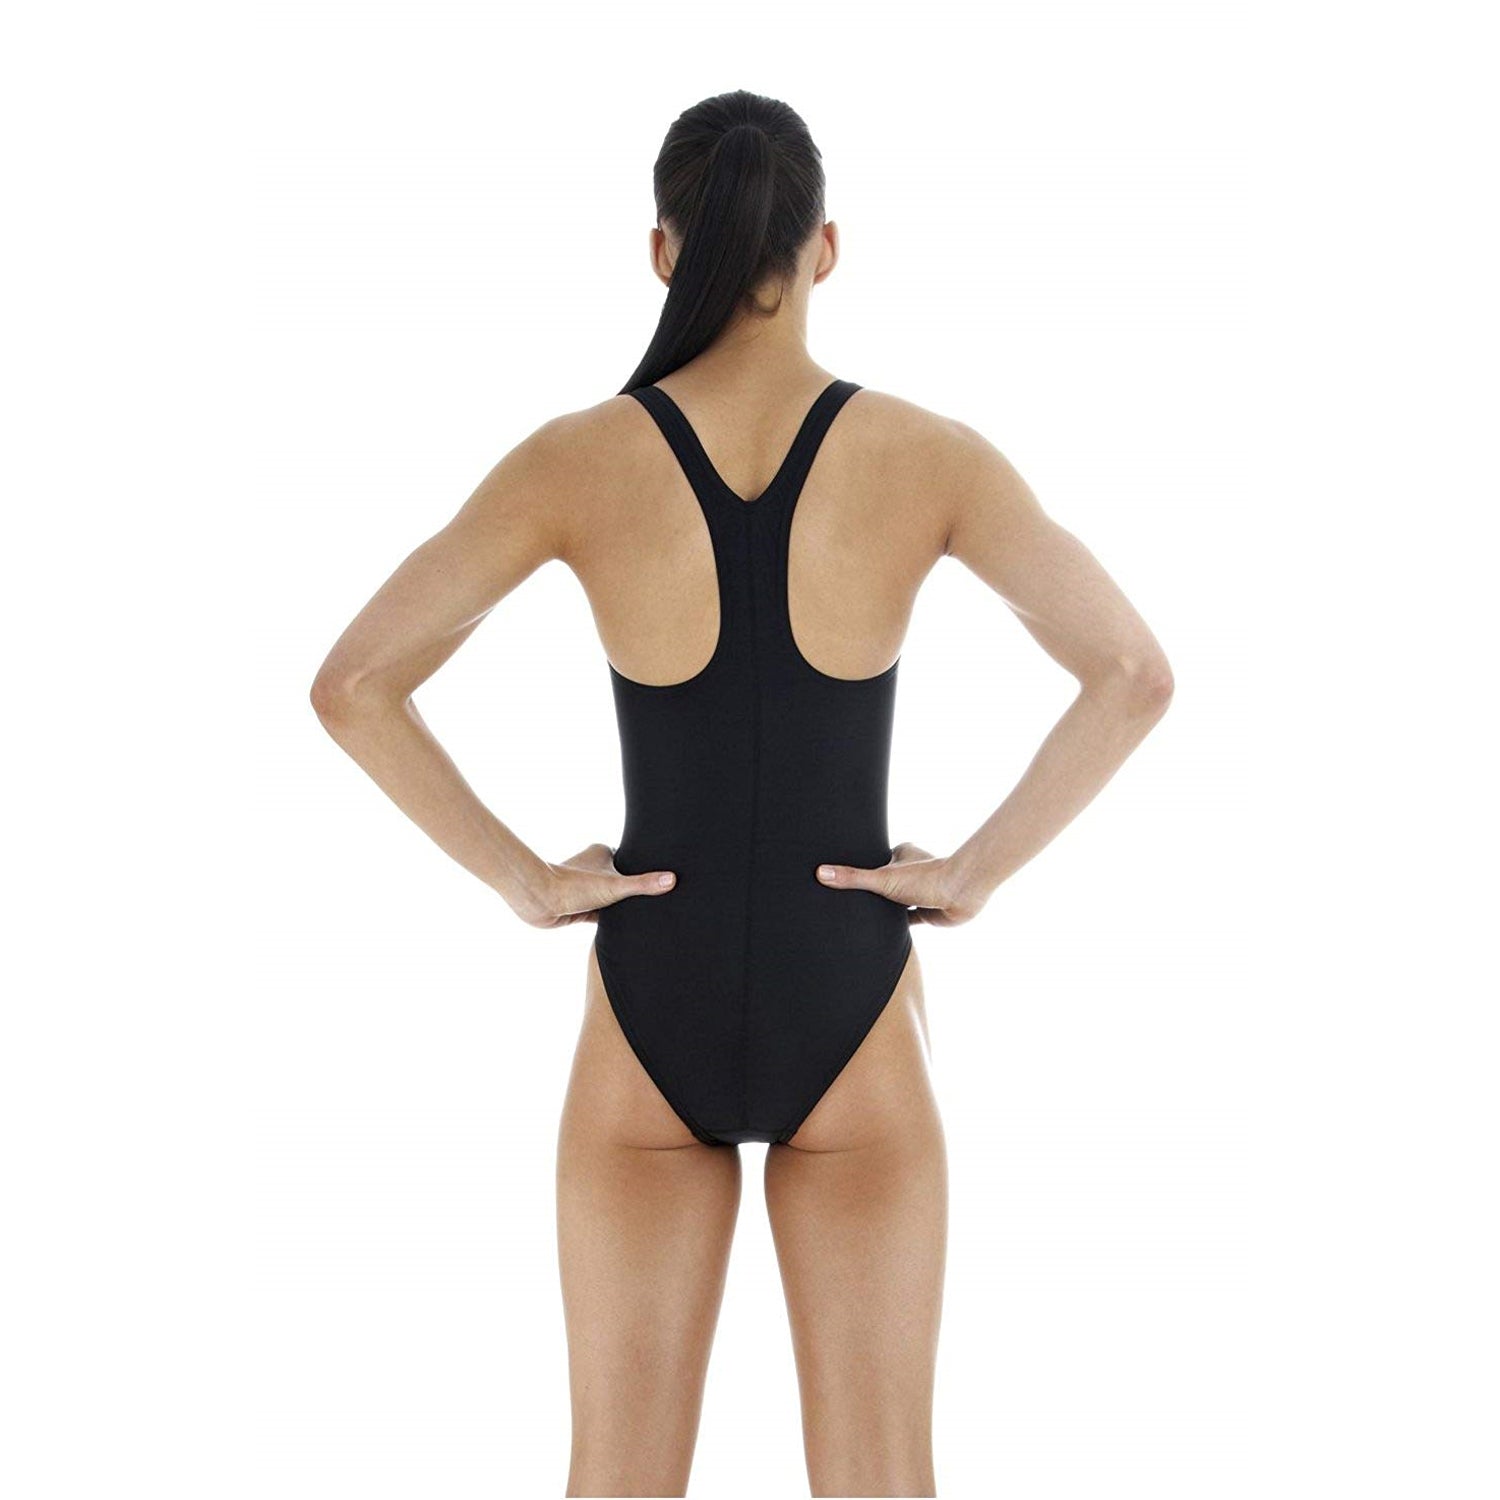 Speedo Female Swimwear Lycra Racerback - Best Price online Prokicksports.com